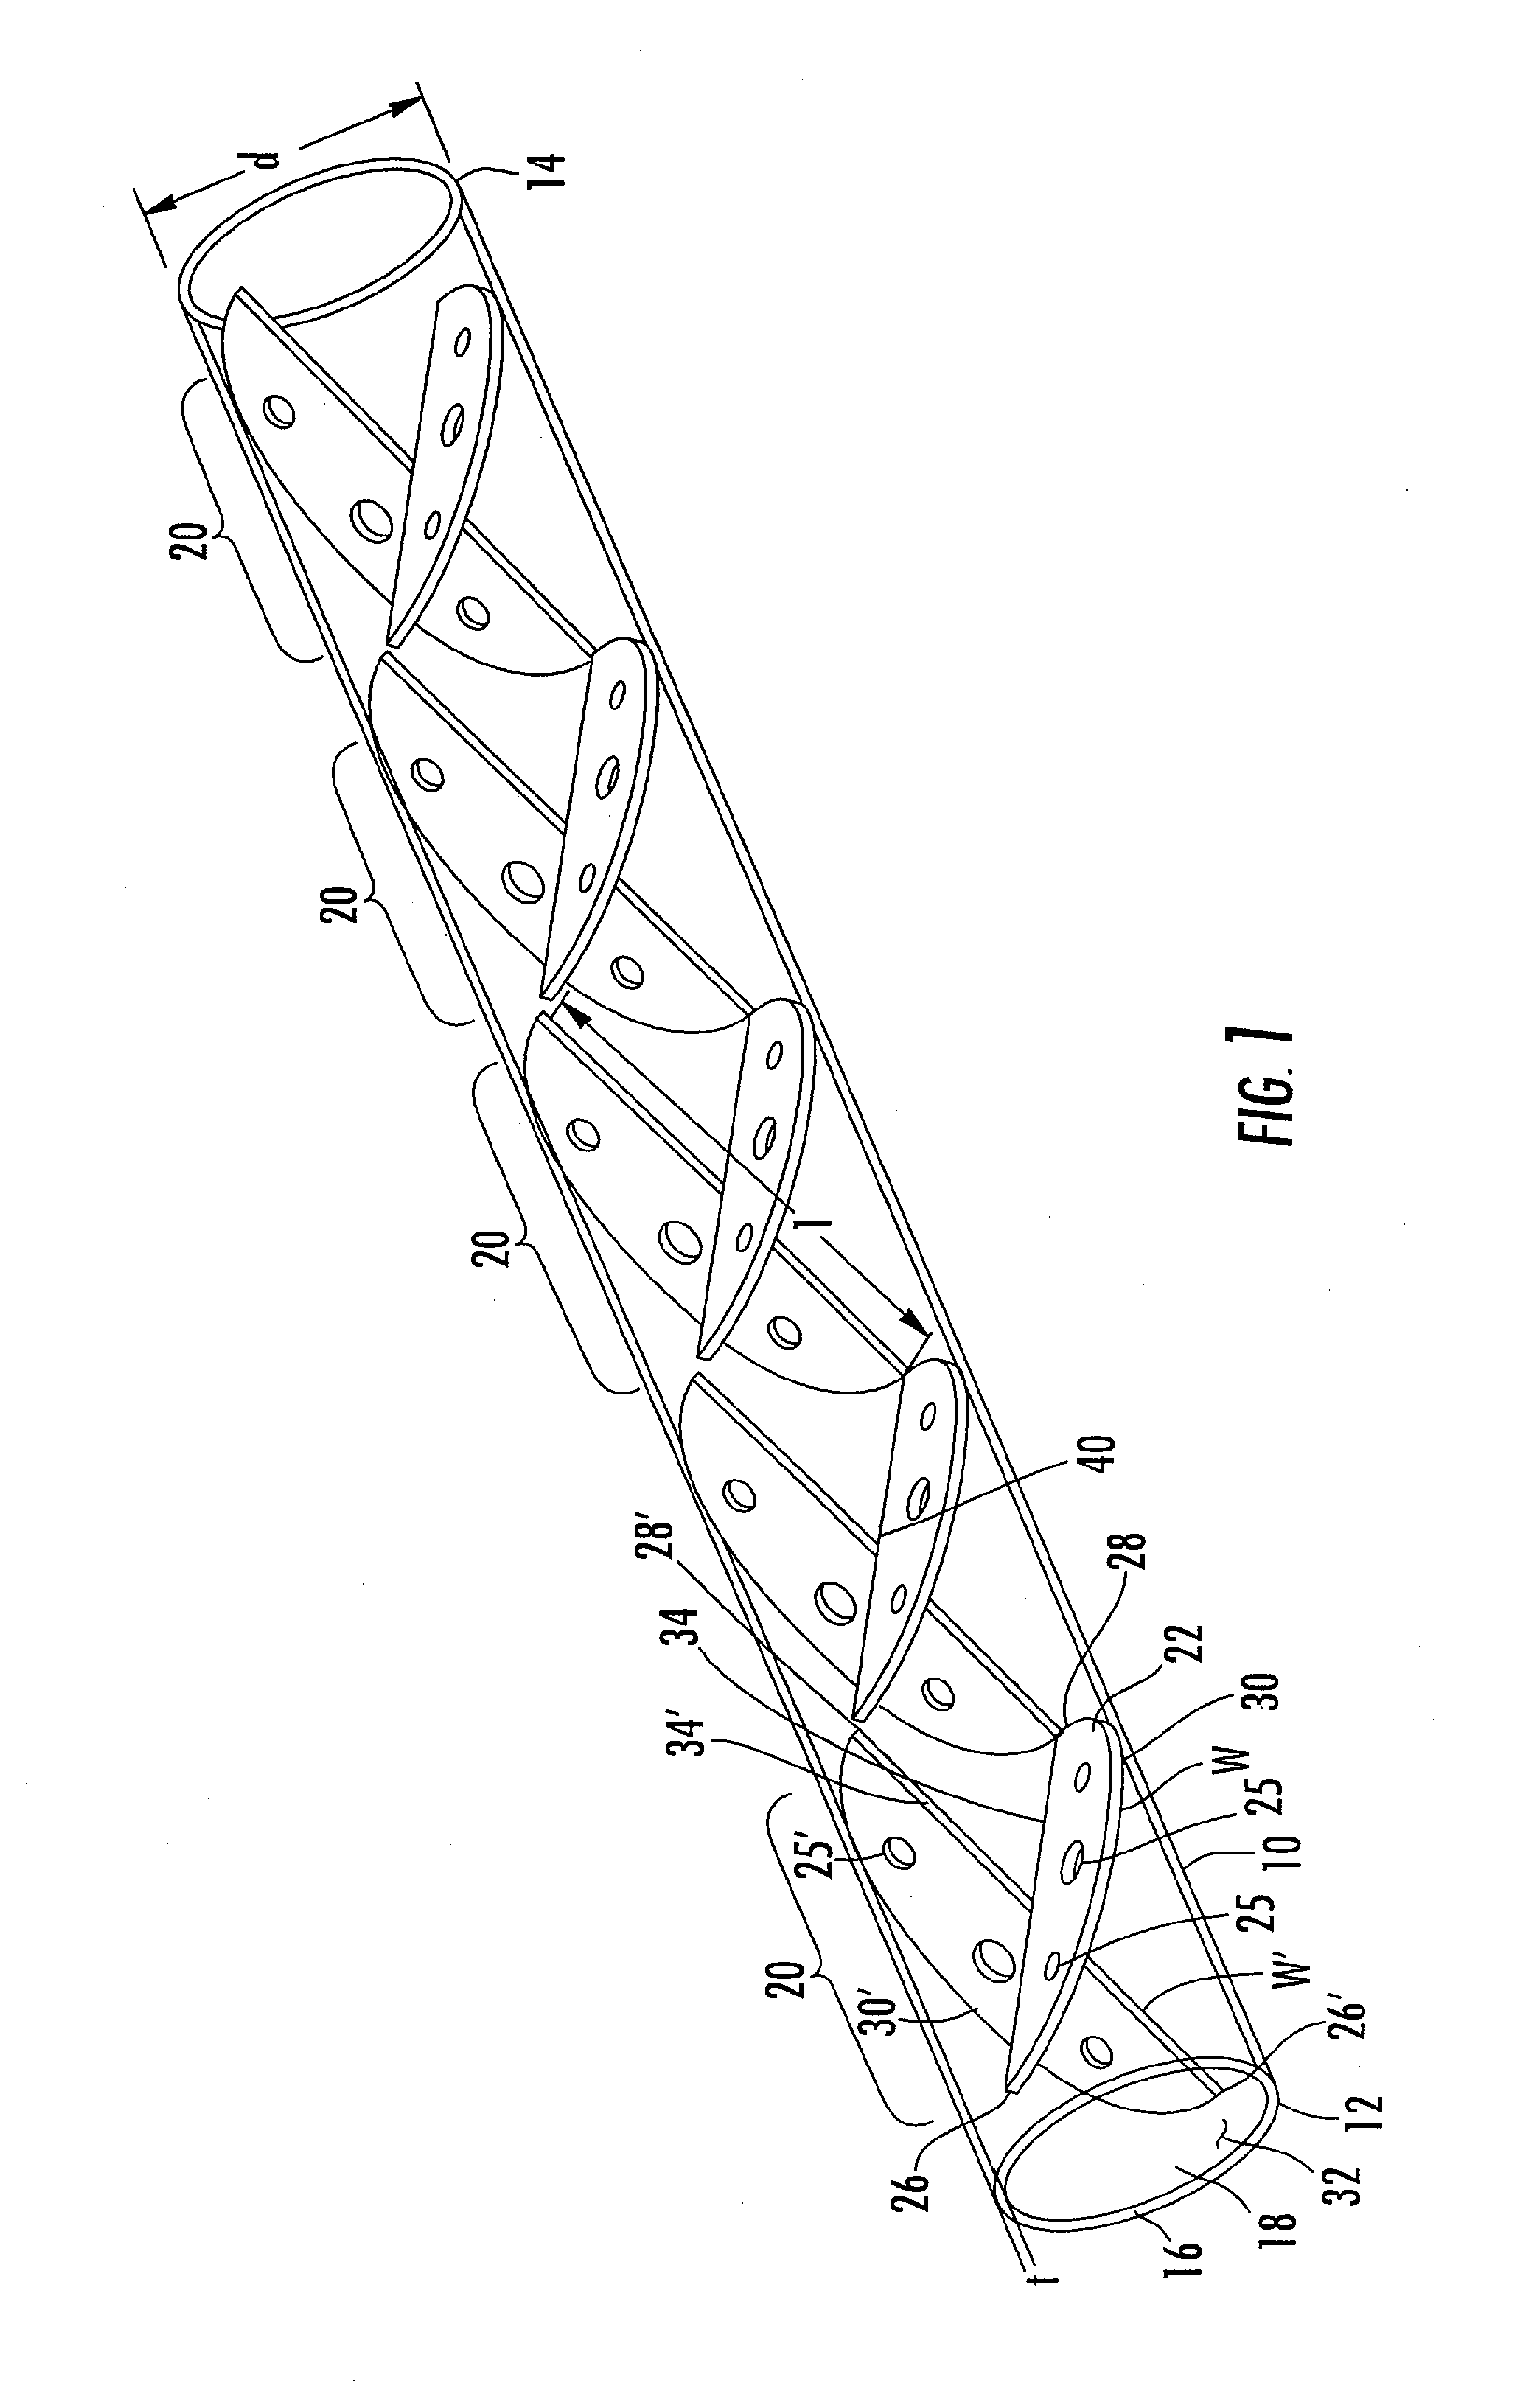 Portable hydrodynamic cavitation manifold